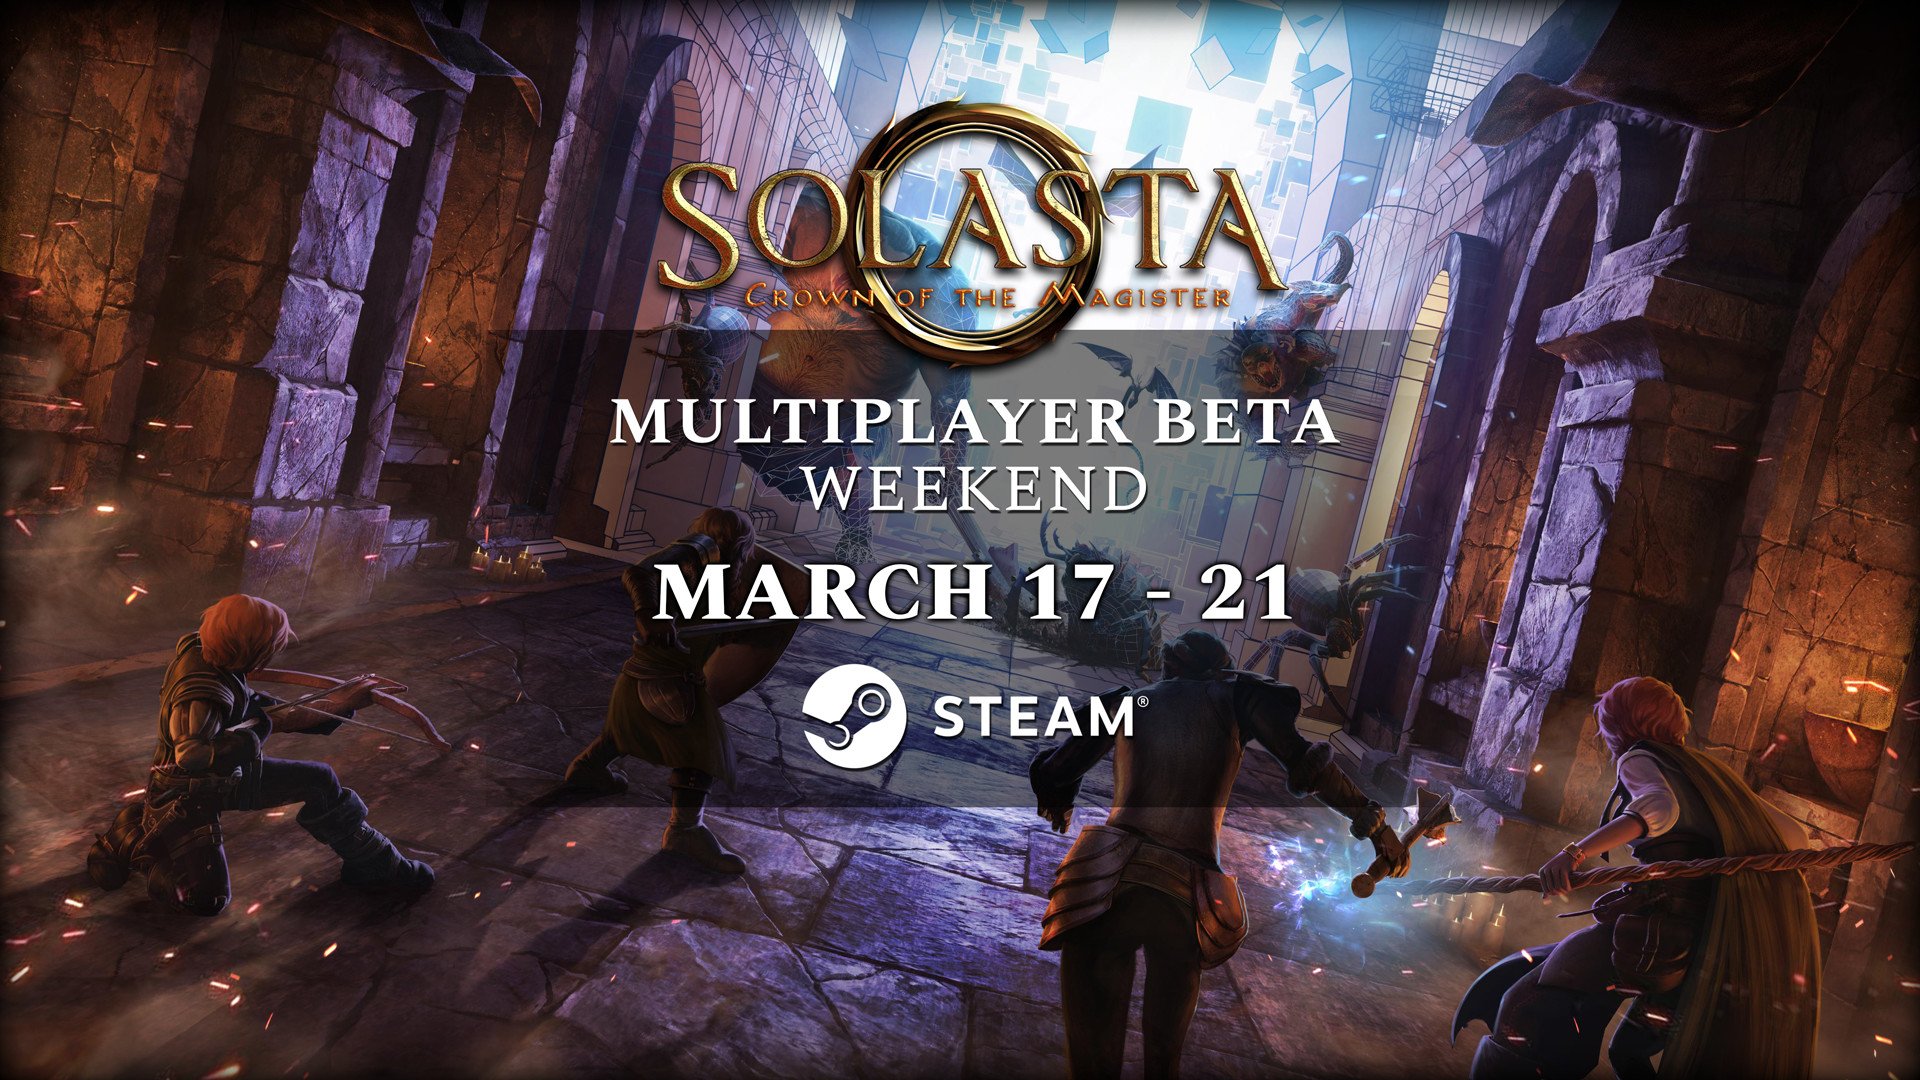 Multiplayer Beta Weekend is live!